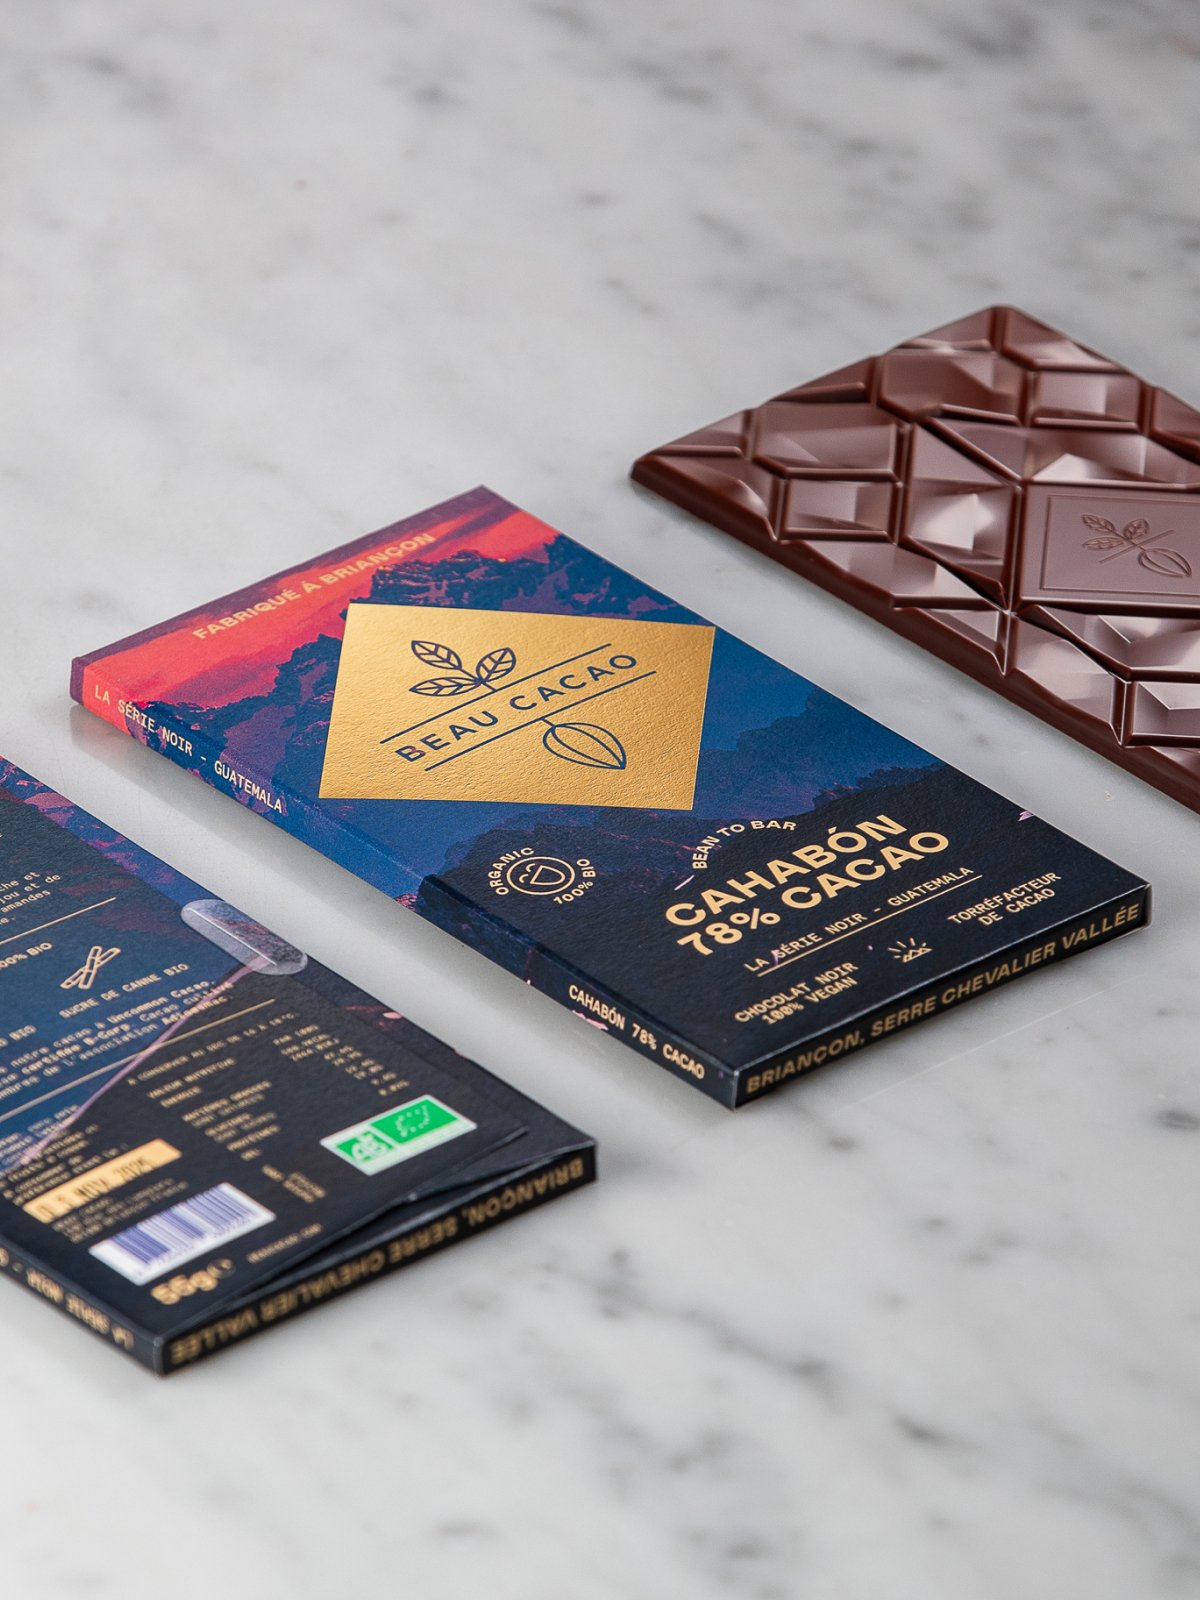 Beau Cacao - Guatemala, Cahabon 78% | Dairy-free Chocolate Brands